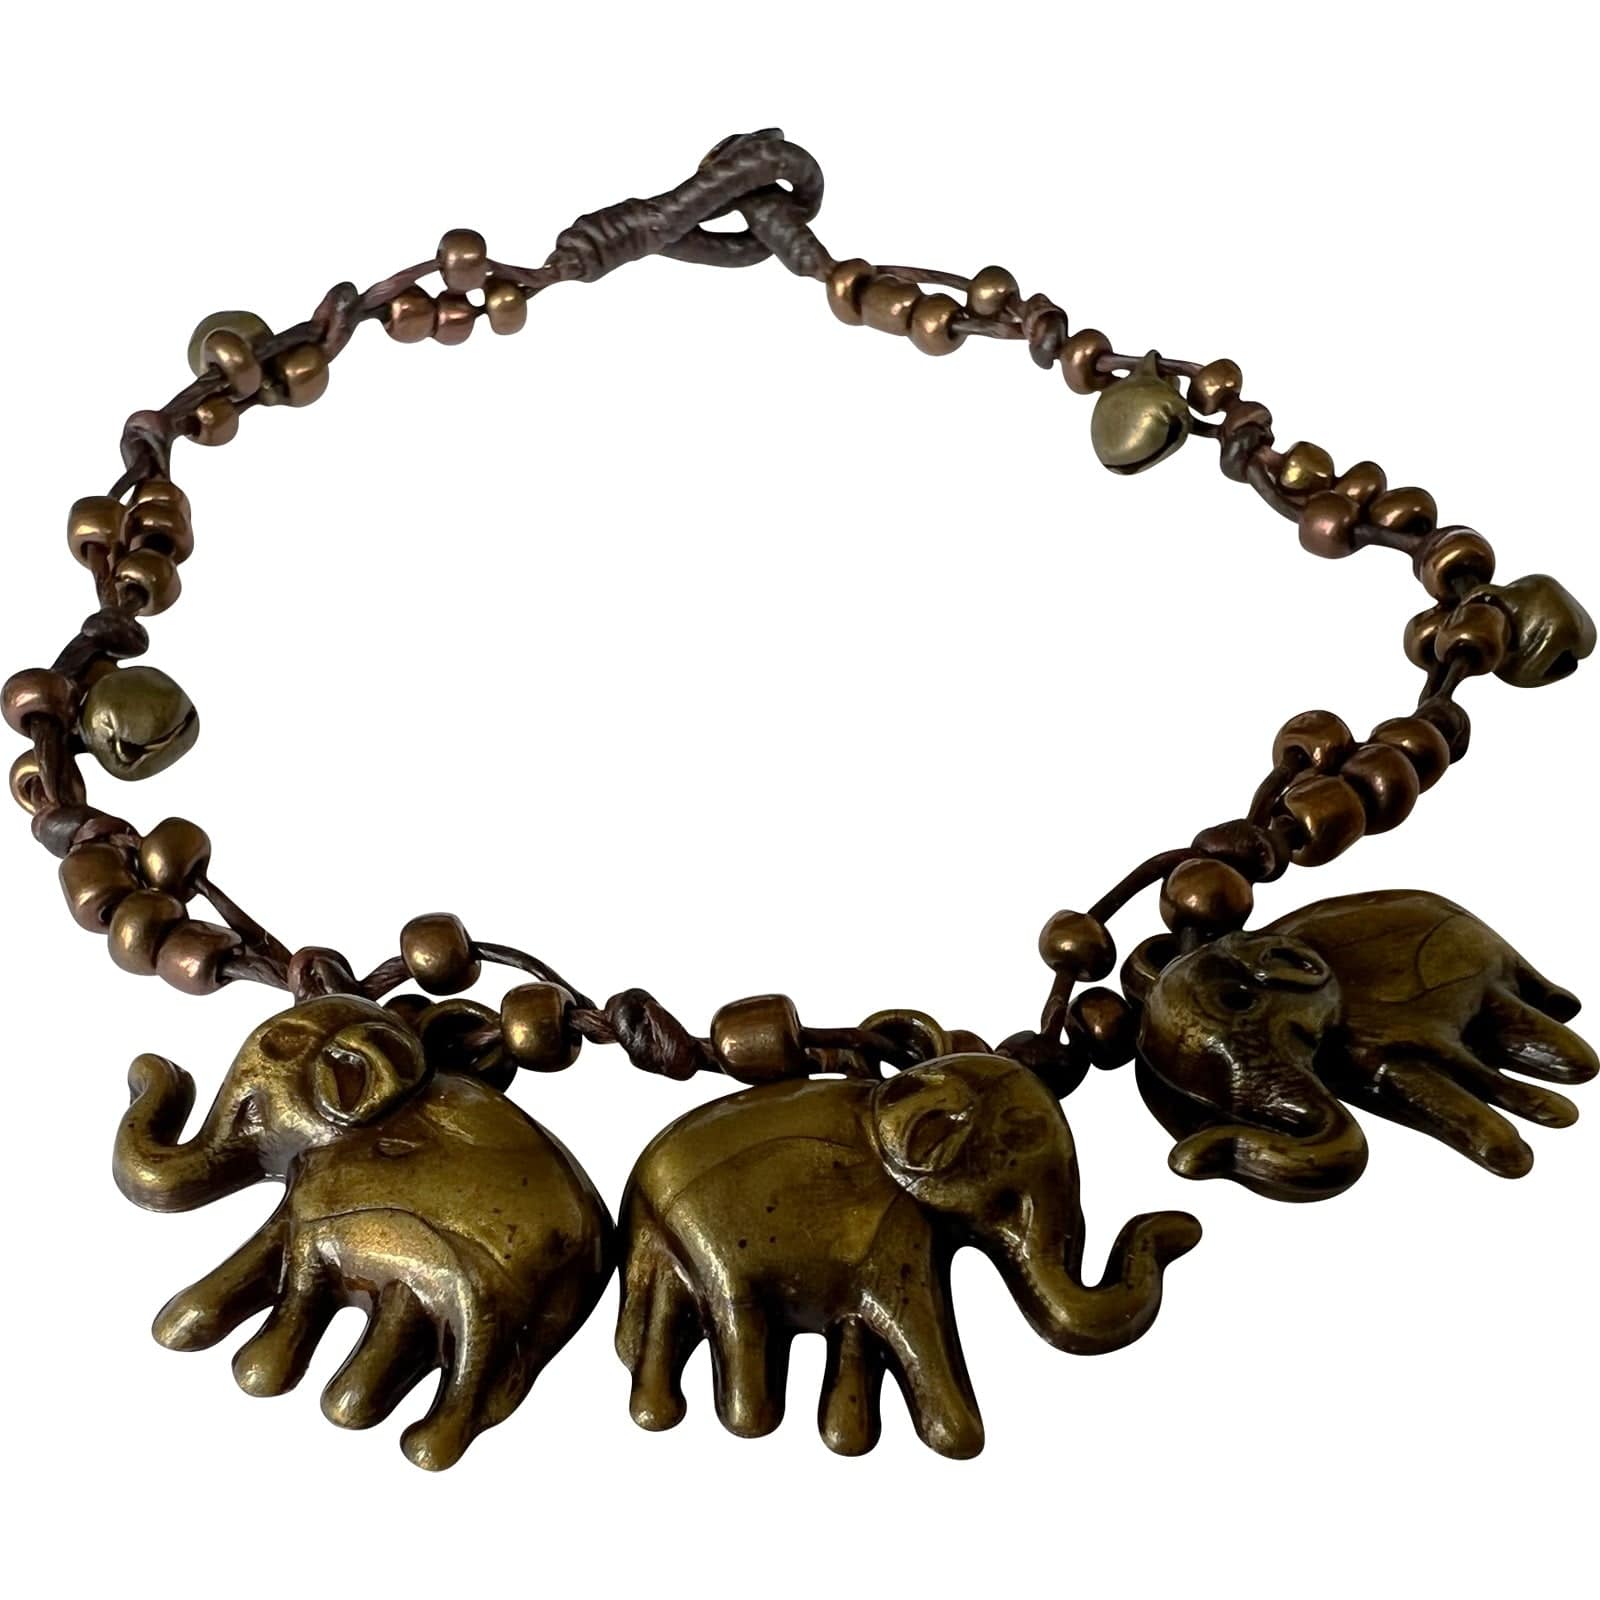 Elephant Anklet Ankle Bracelet Foot Chain Womens Ladies Girls Beach Jewellery